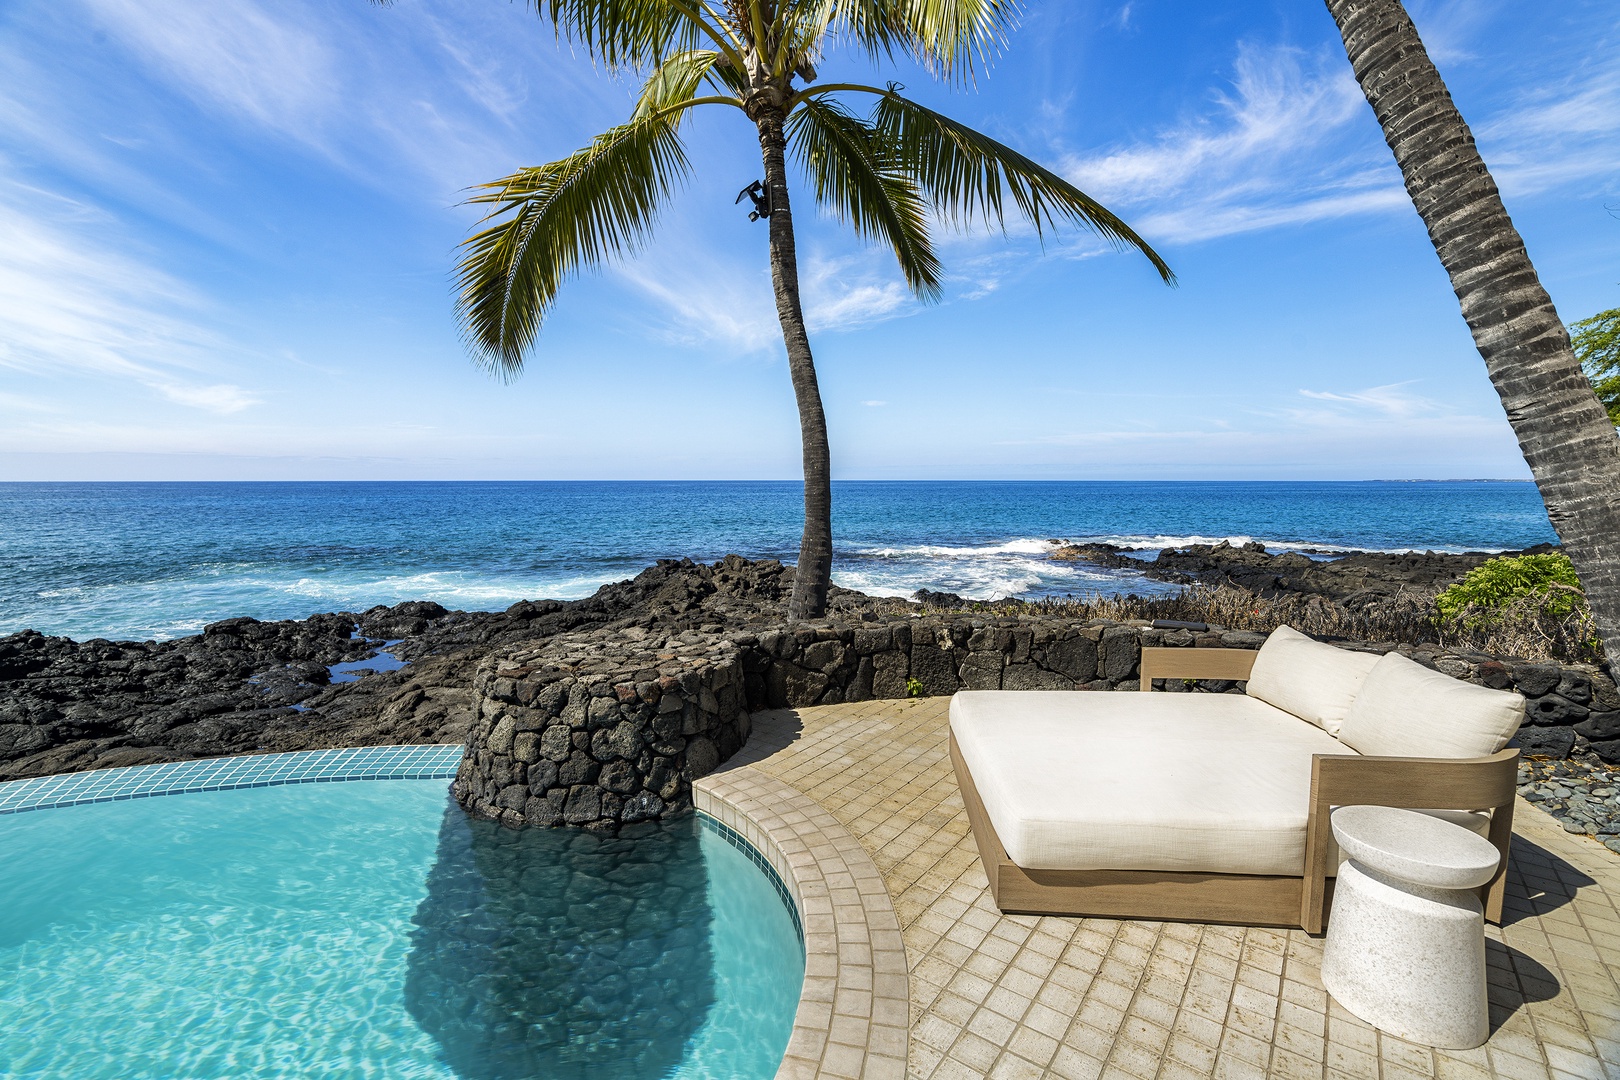 Kailua Kona Vacation Rentals, Ali'i Point #9 - Lounge the day away!